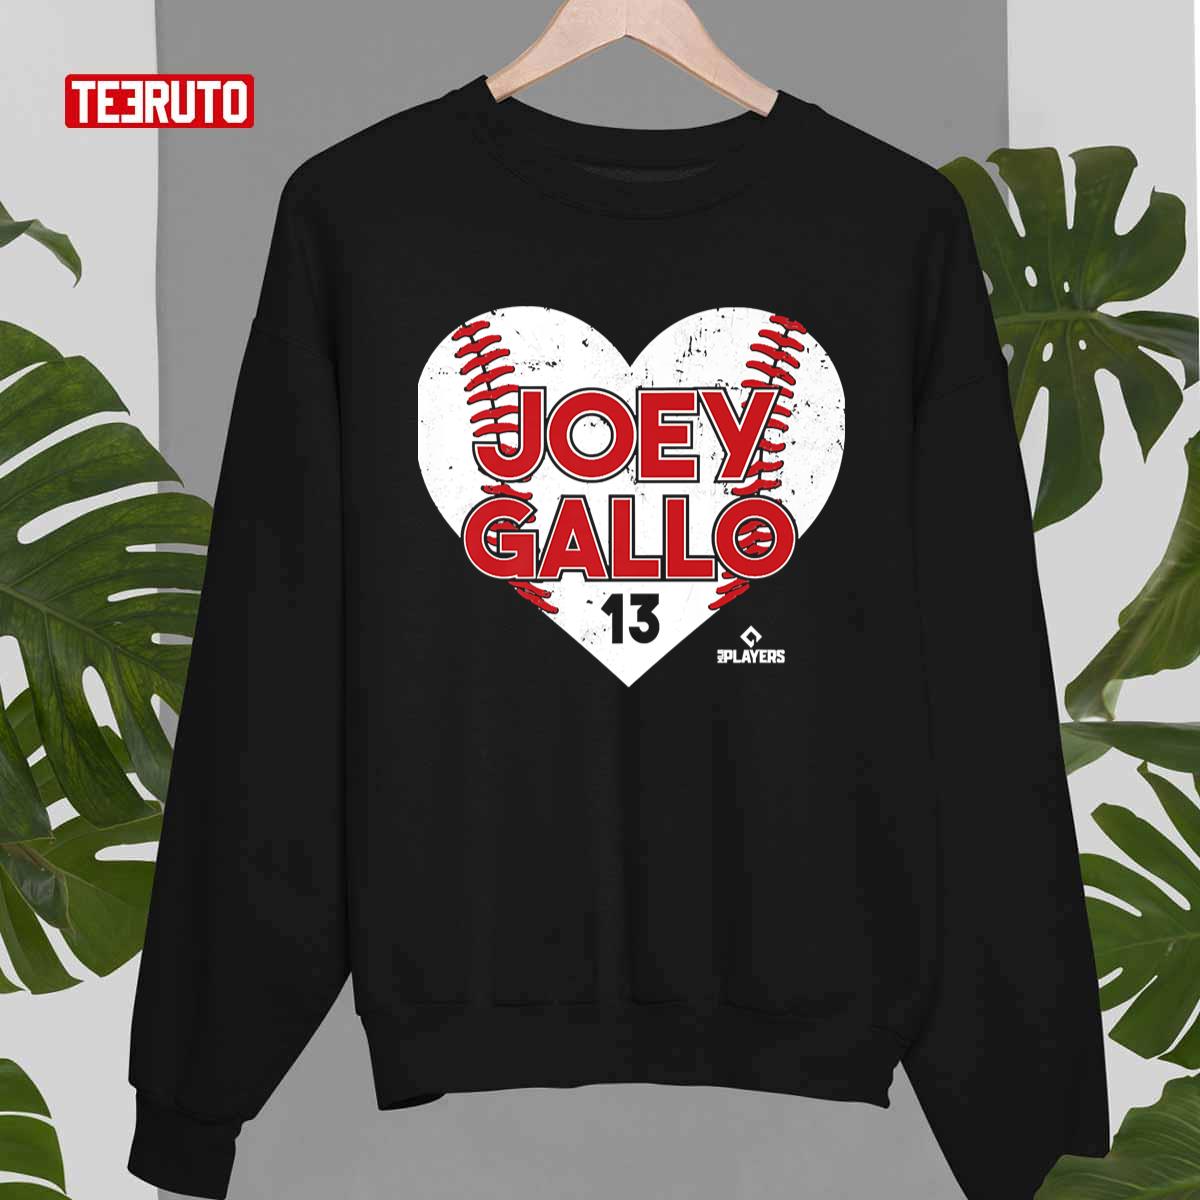 Heart Baseball Joey Gallo Unisex T-Shirt